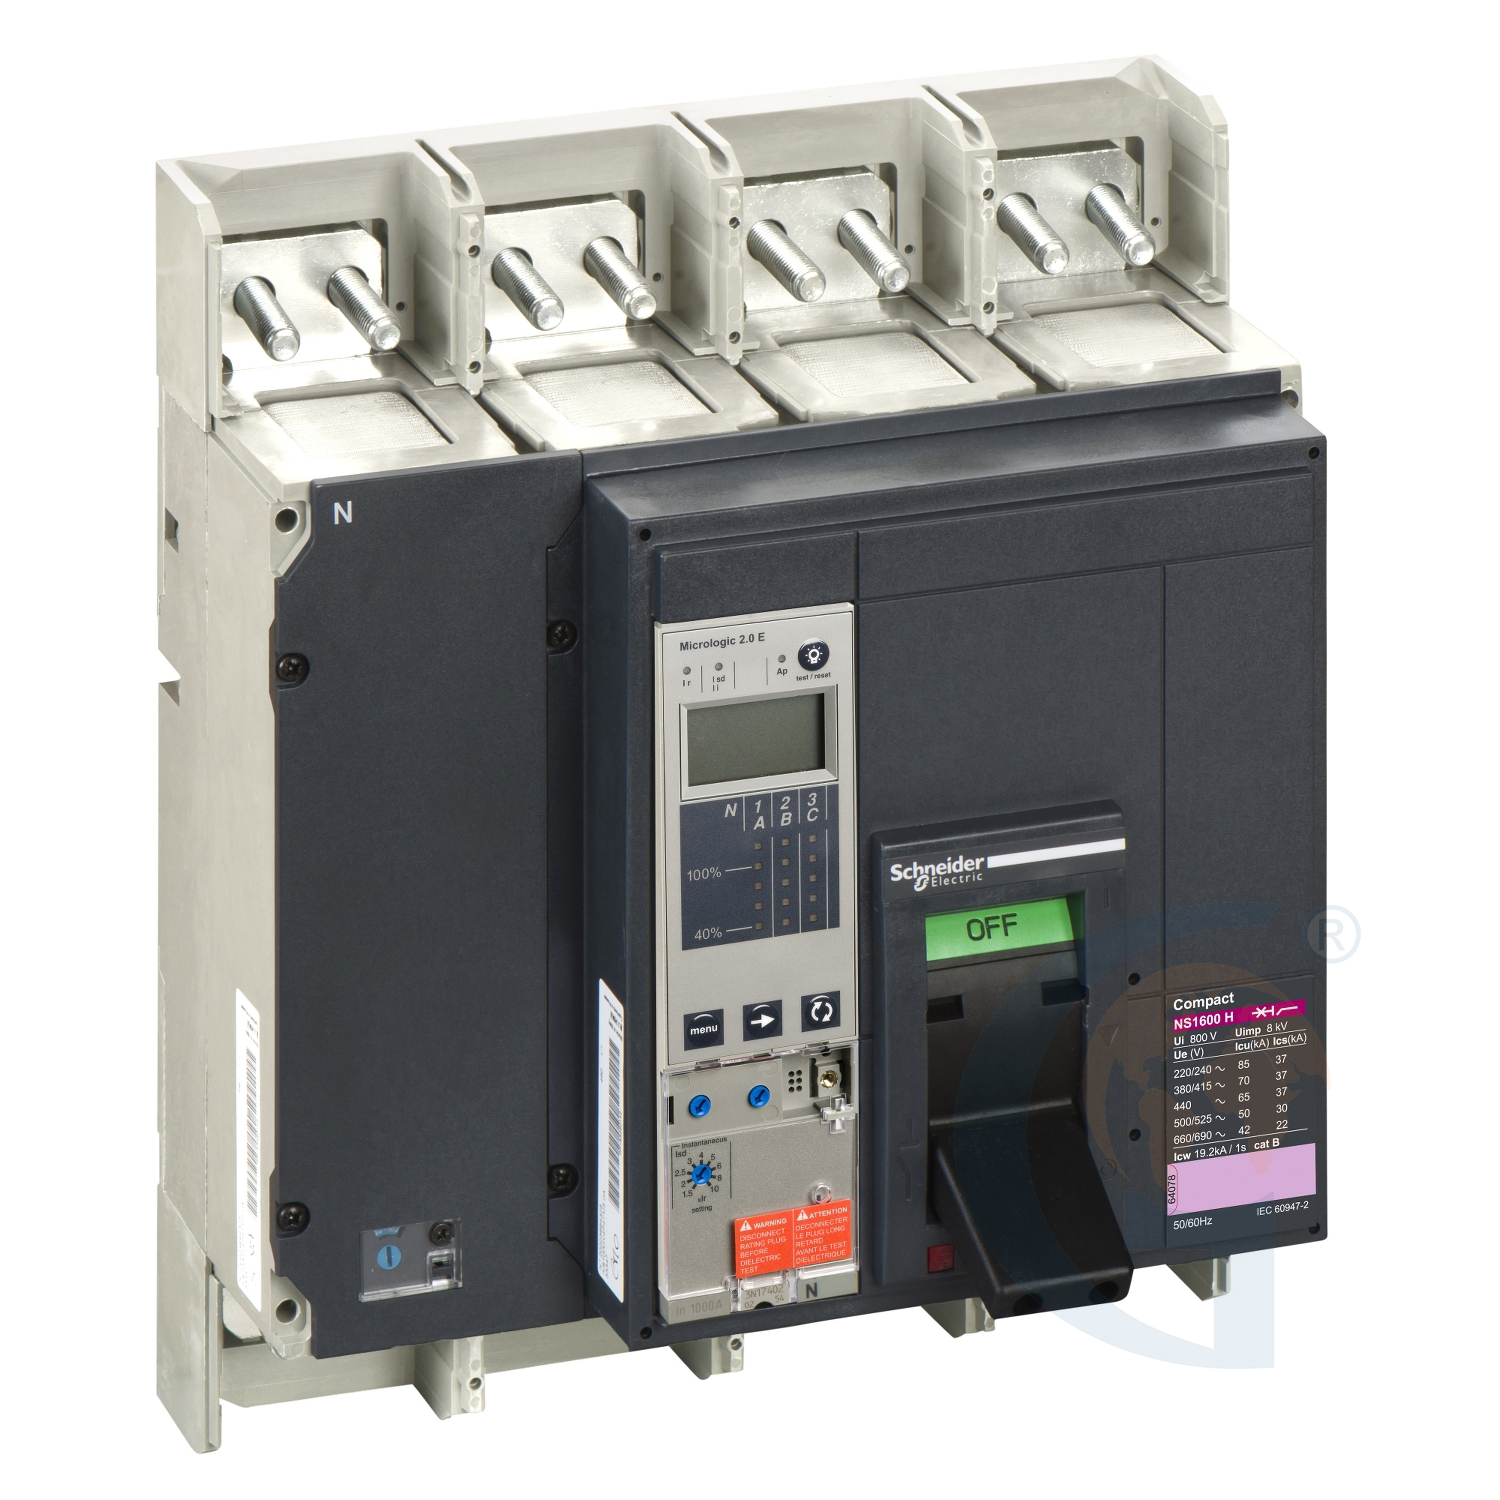 Schneider Electric 34419 circuit breaker Compact NS1600H – Micrologic 2.0 E – 1600 A – 4 poles 4t https://gesrepair.com/wp-content/uploads/2020/Schneider/Schneider_Electric_34419_.jpg